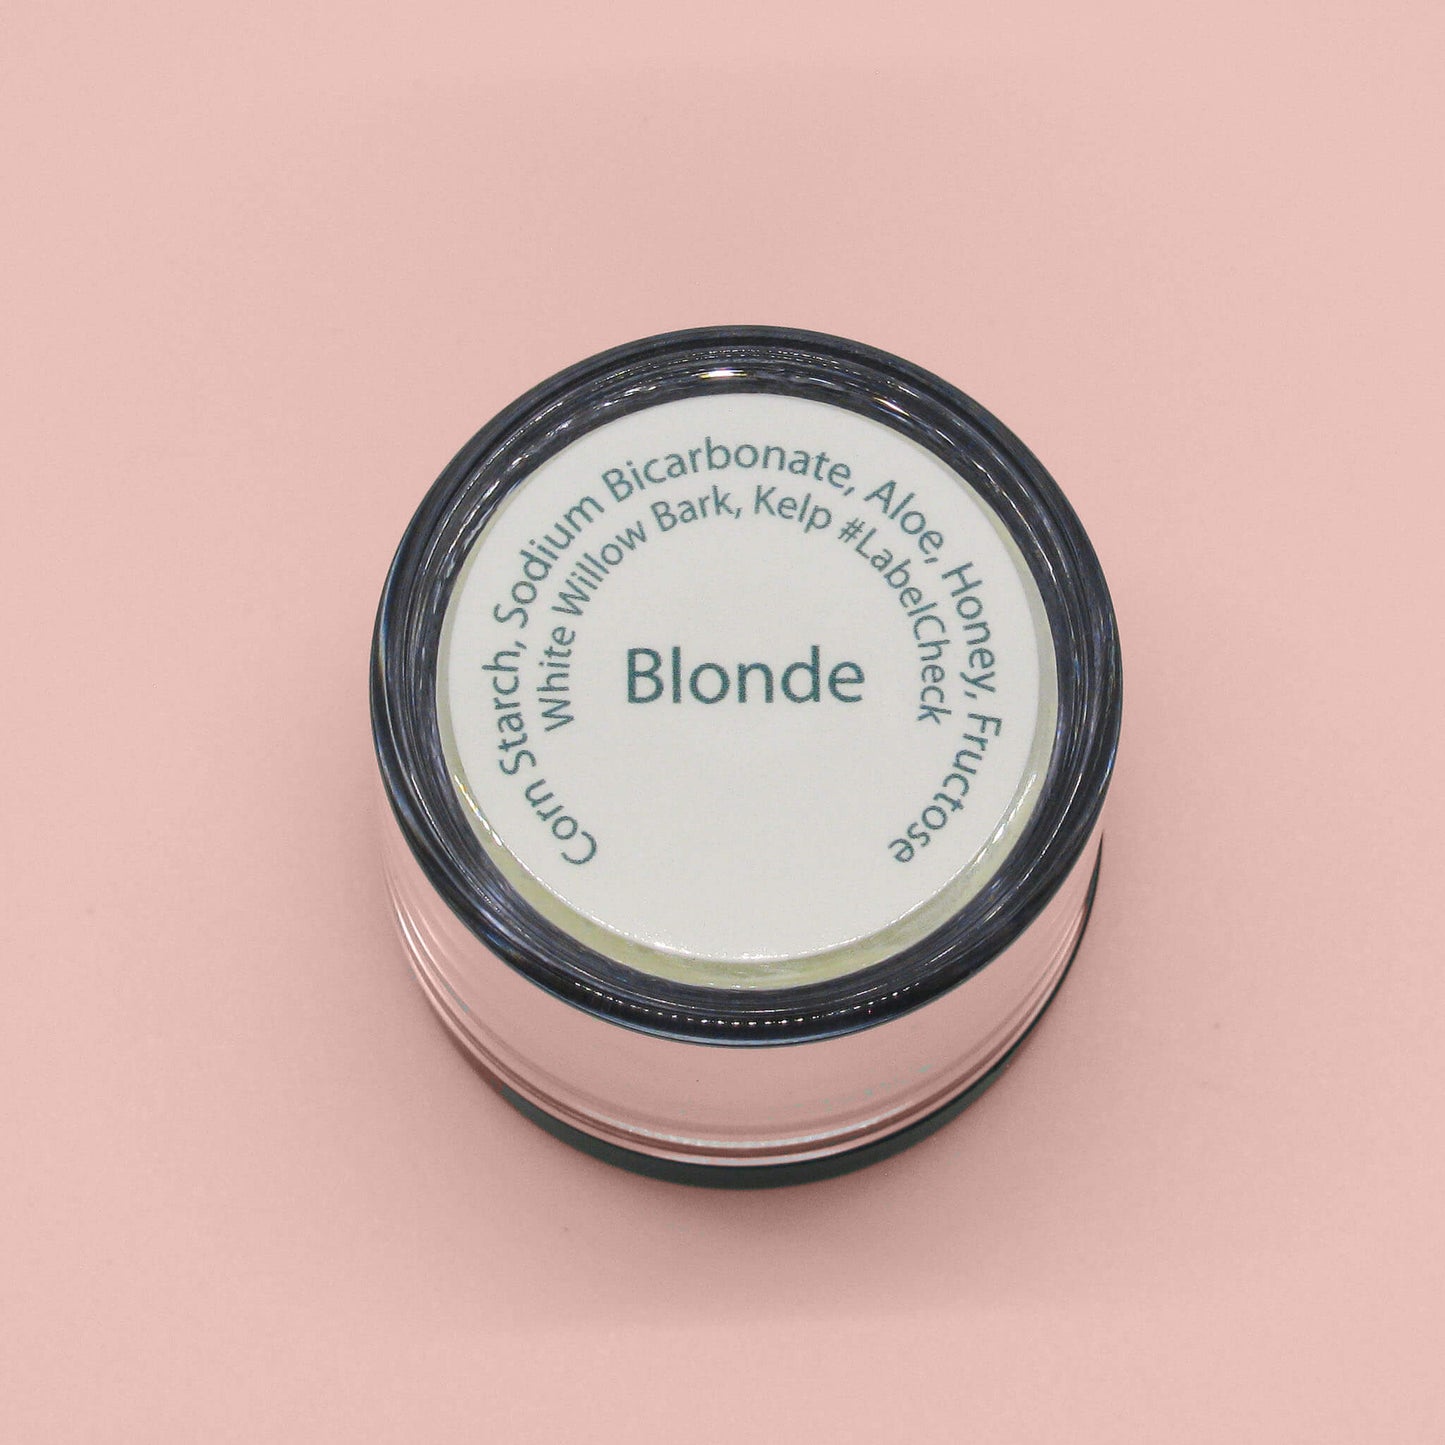 Refill in Blonde